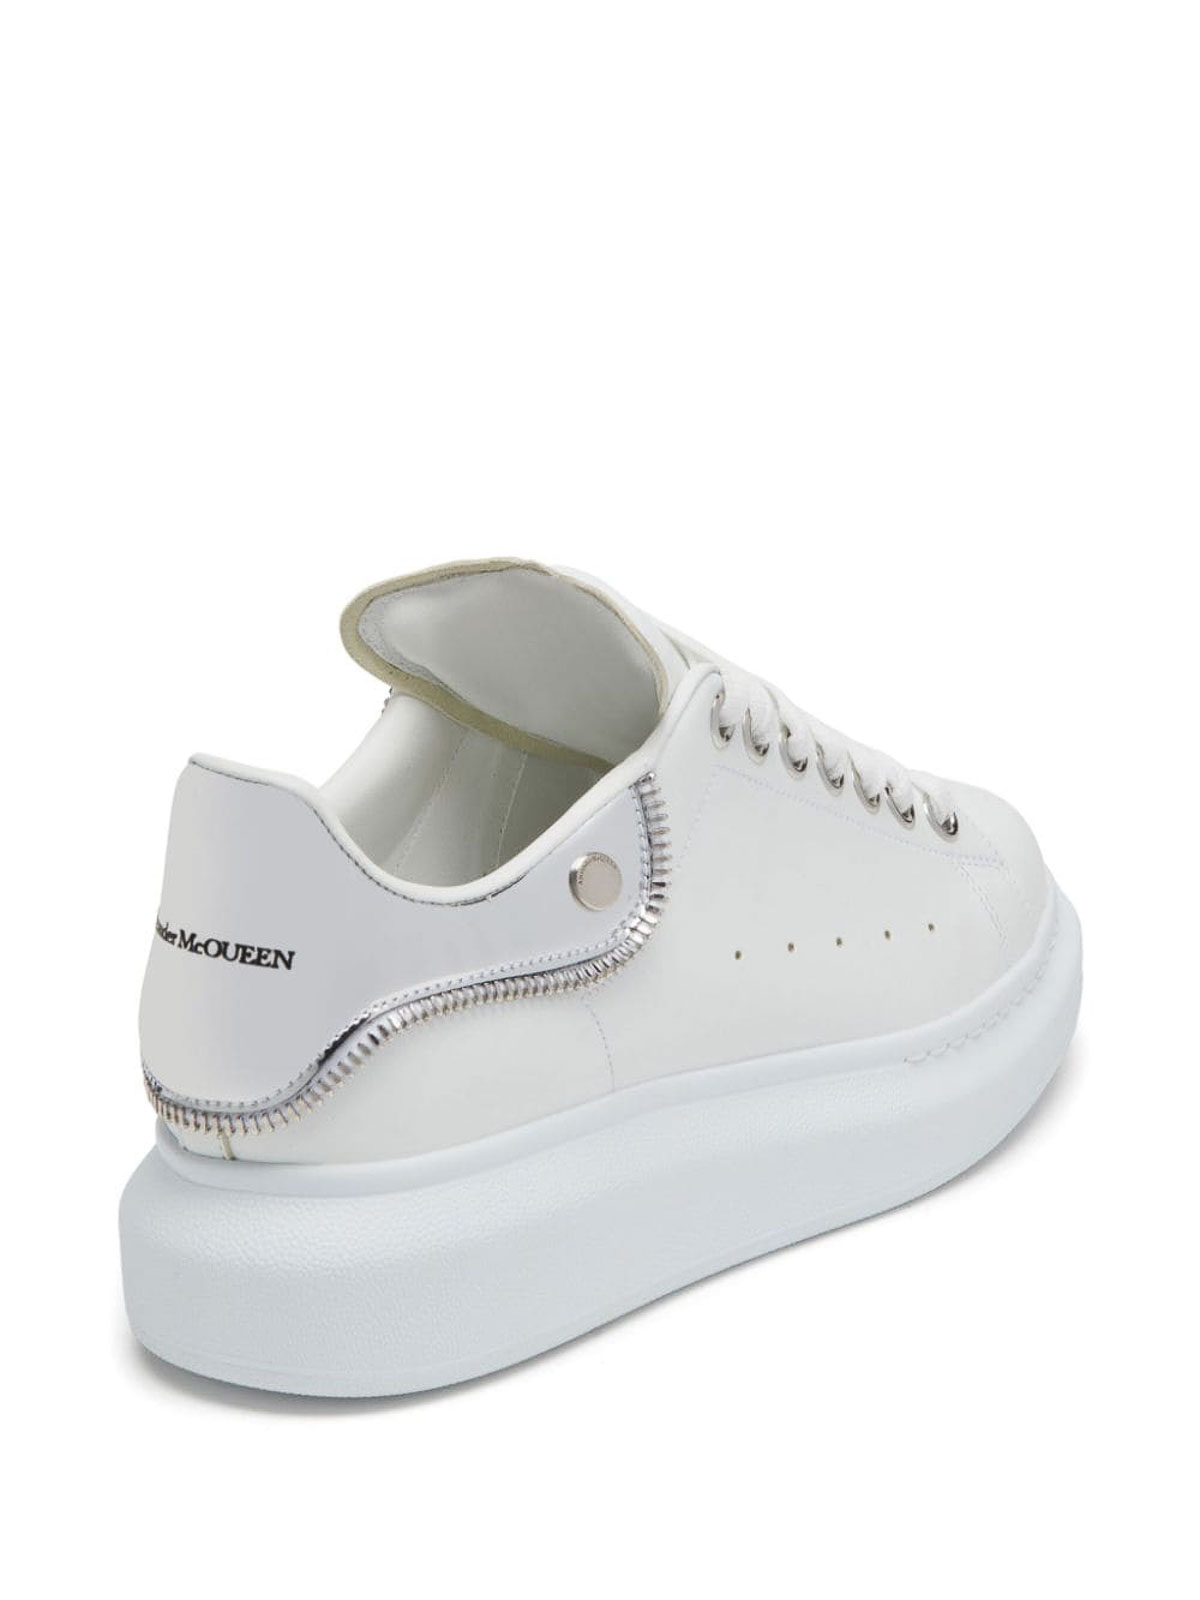 Alexander McQueen - Women's Oversized Low-top Sneakers - White - Leather - Sneakers - 35.5